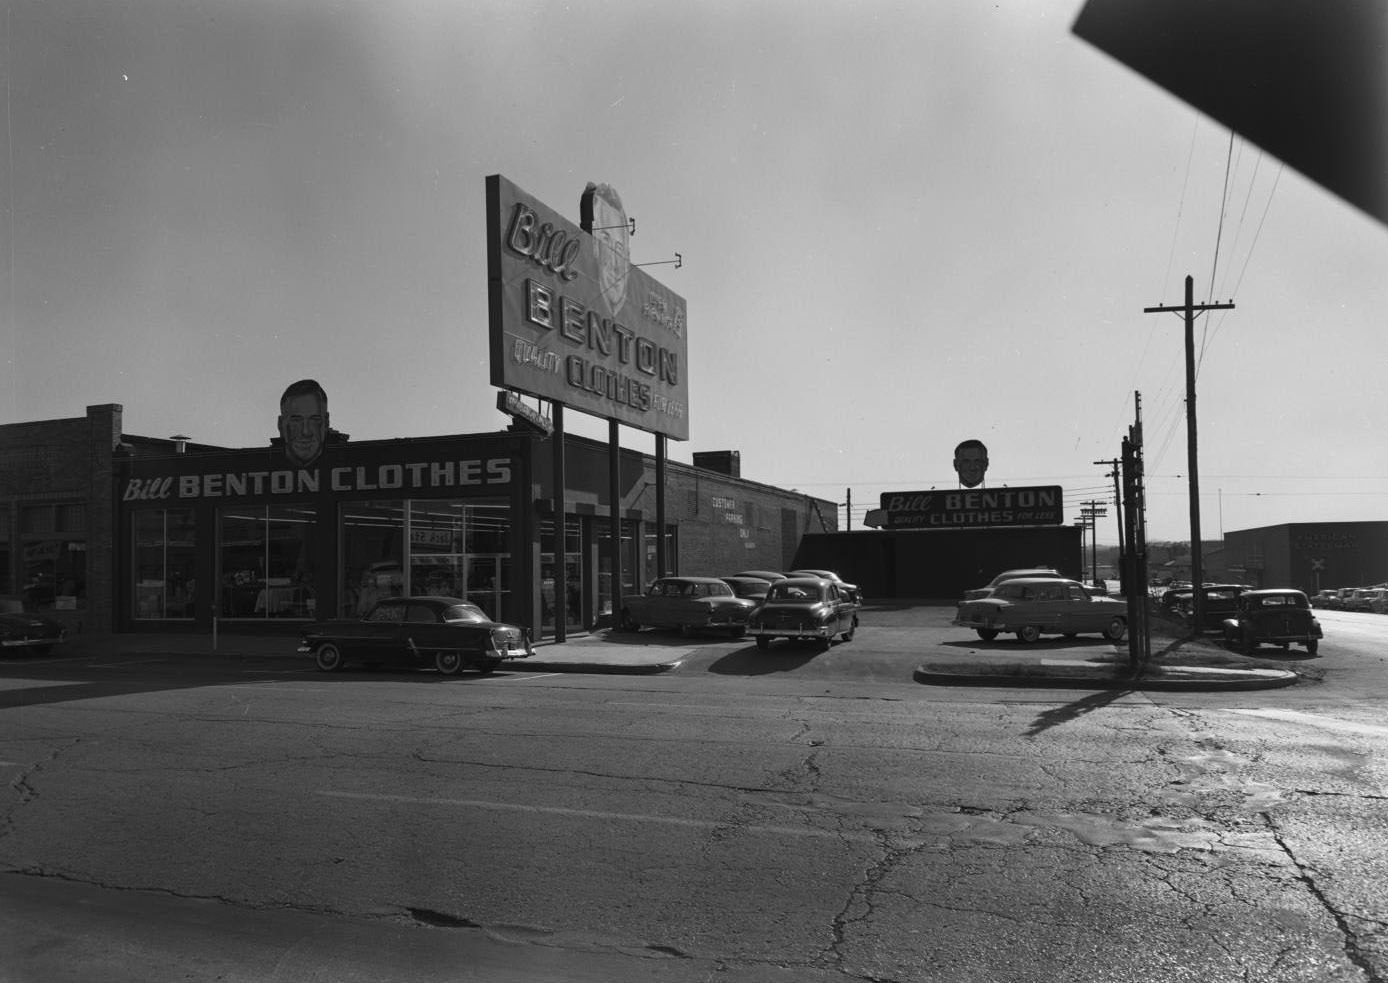 Bill Benton Clothes Store Exterior, 1955